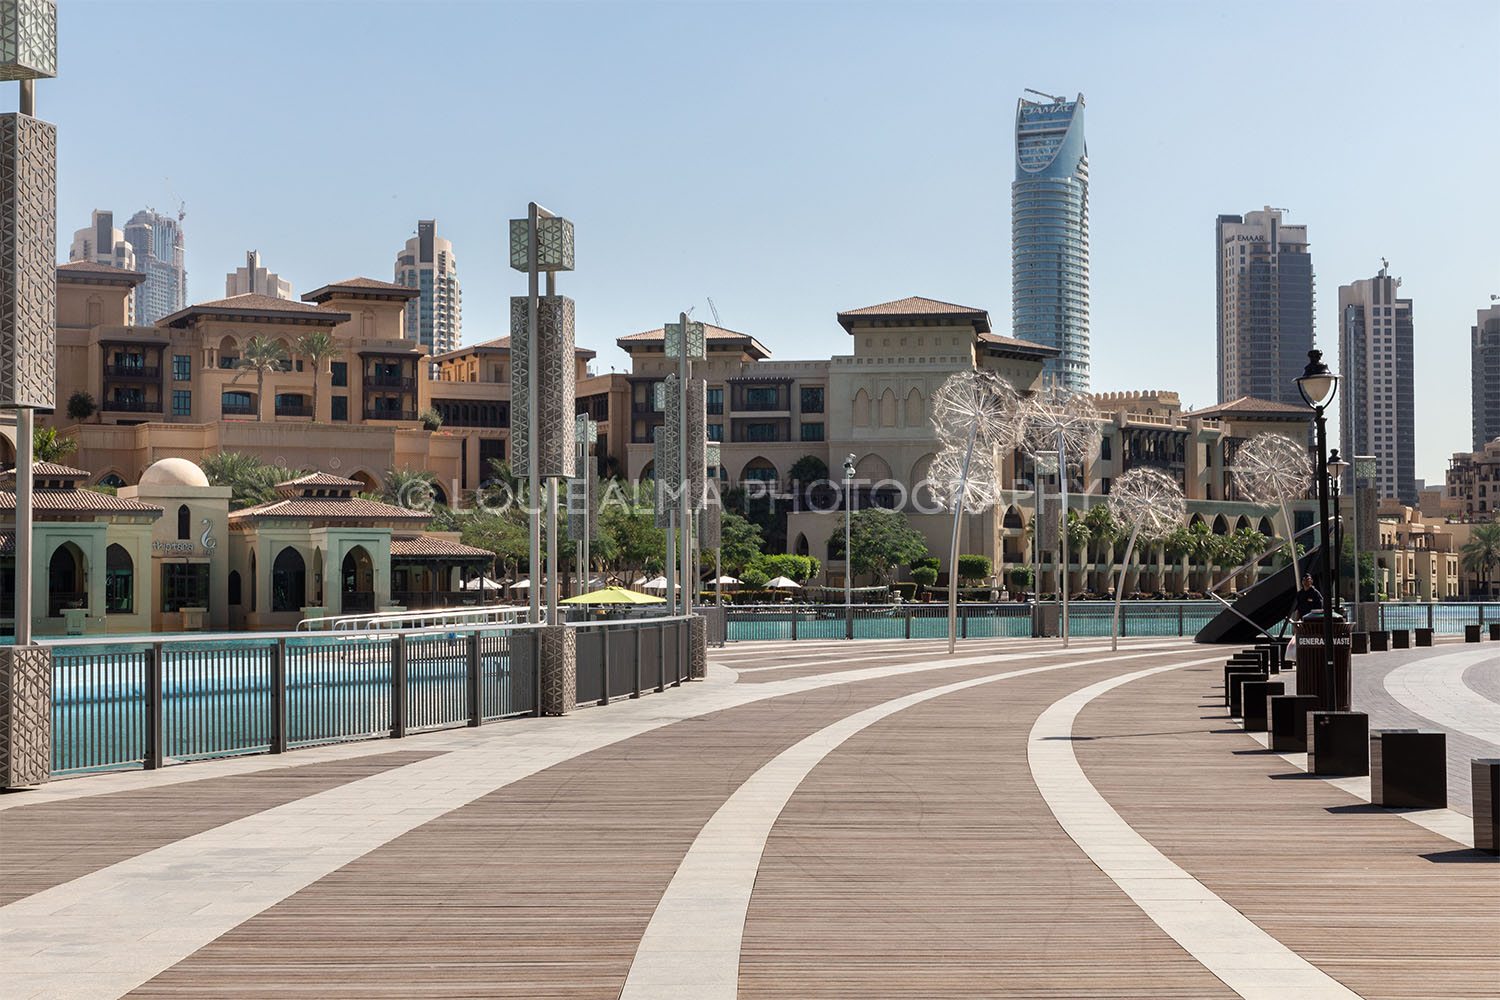 Burj Boulevard at Dubai, United Arab Emirates | Photo by Louie Alma